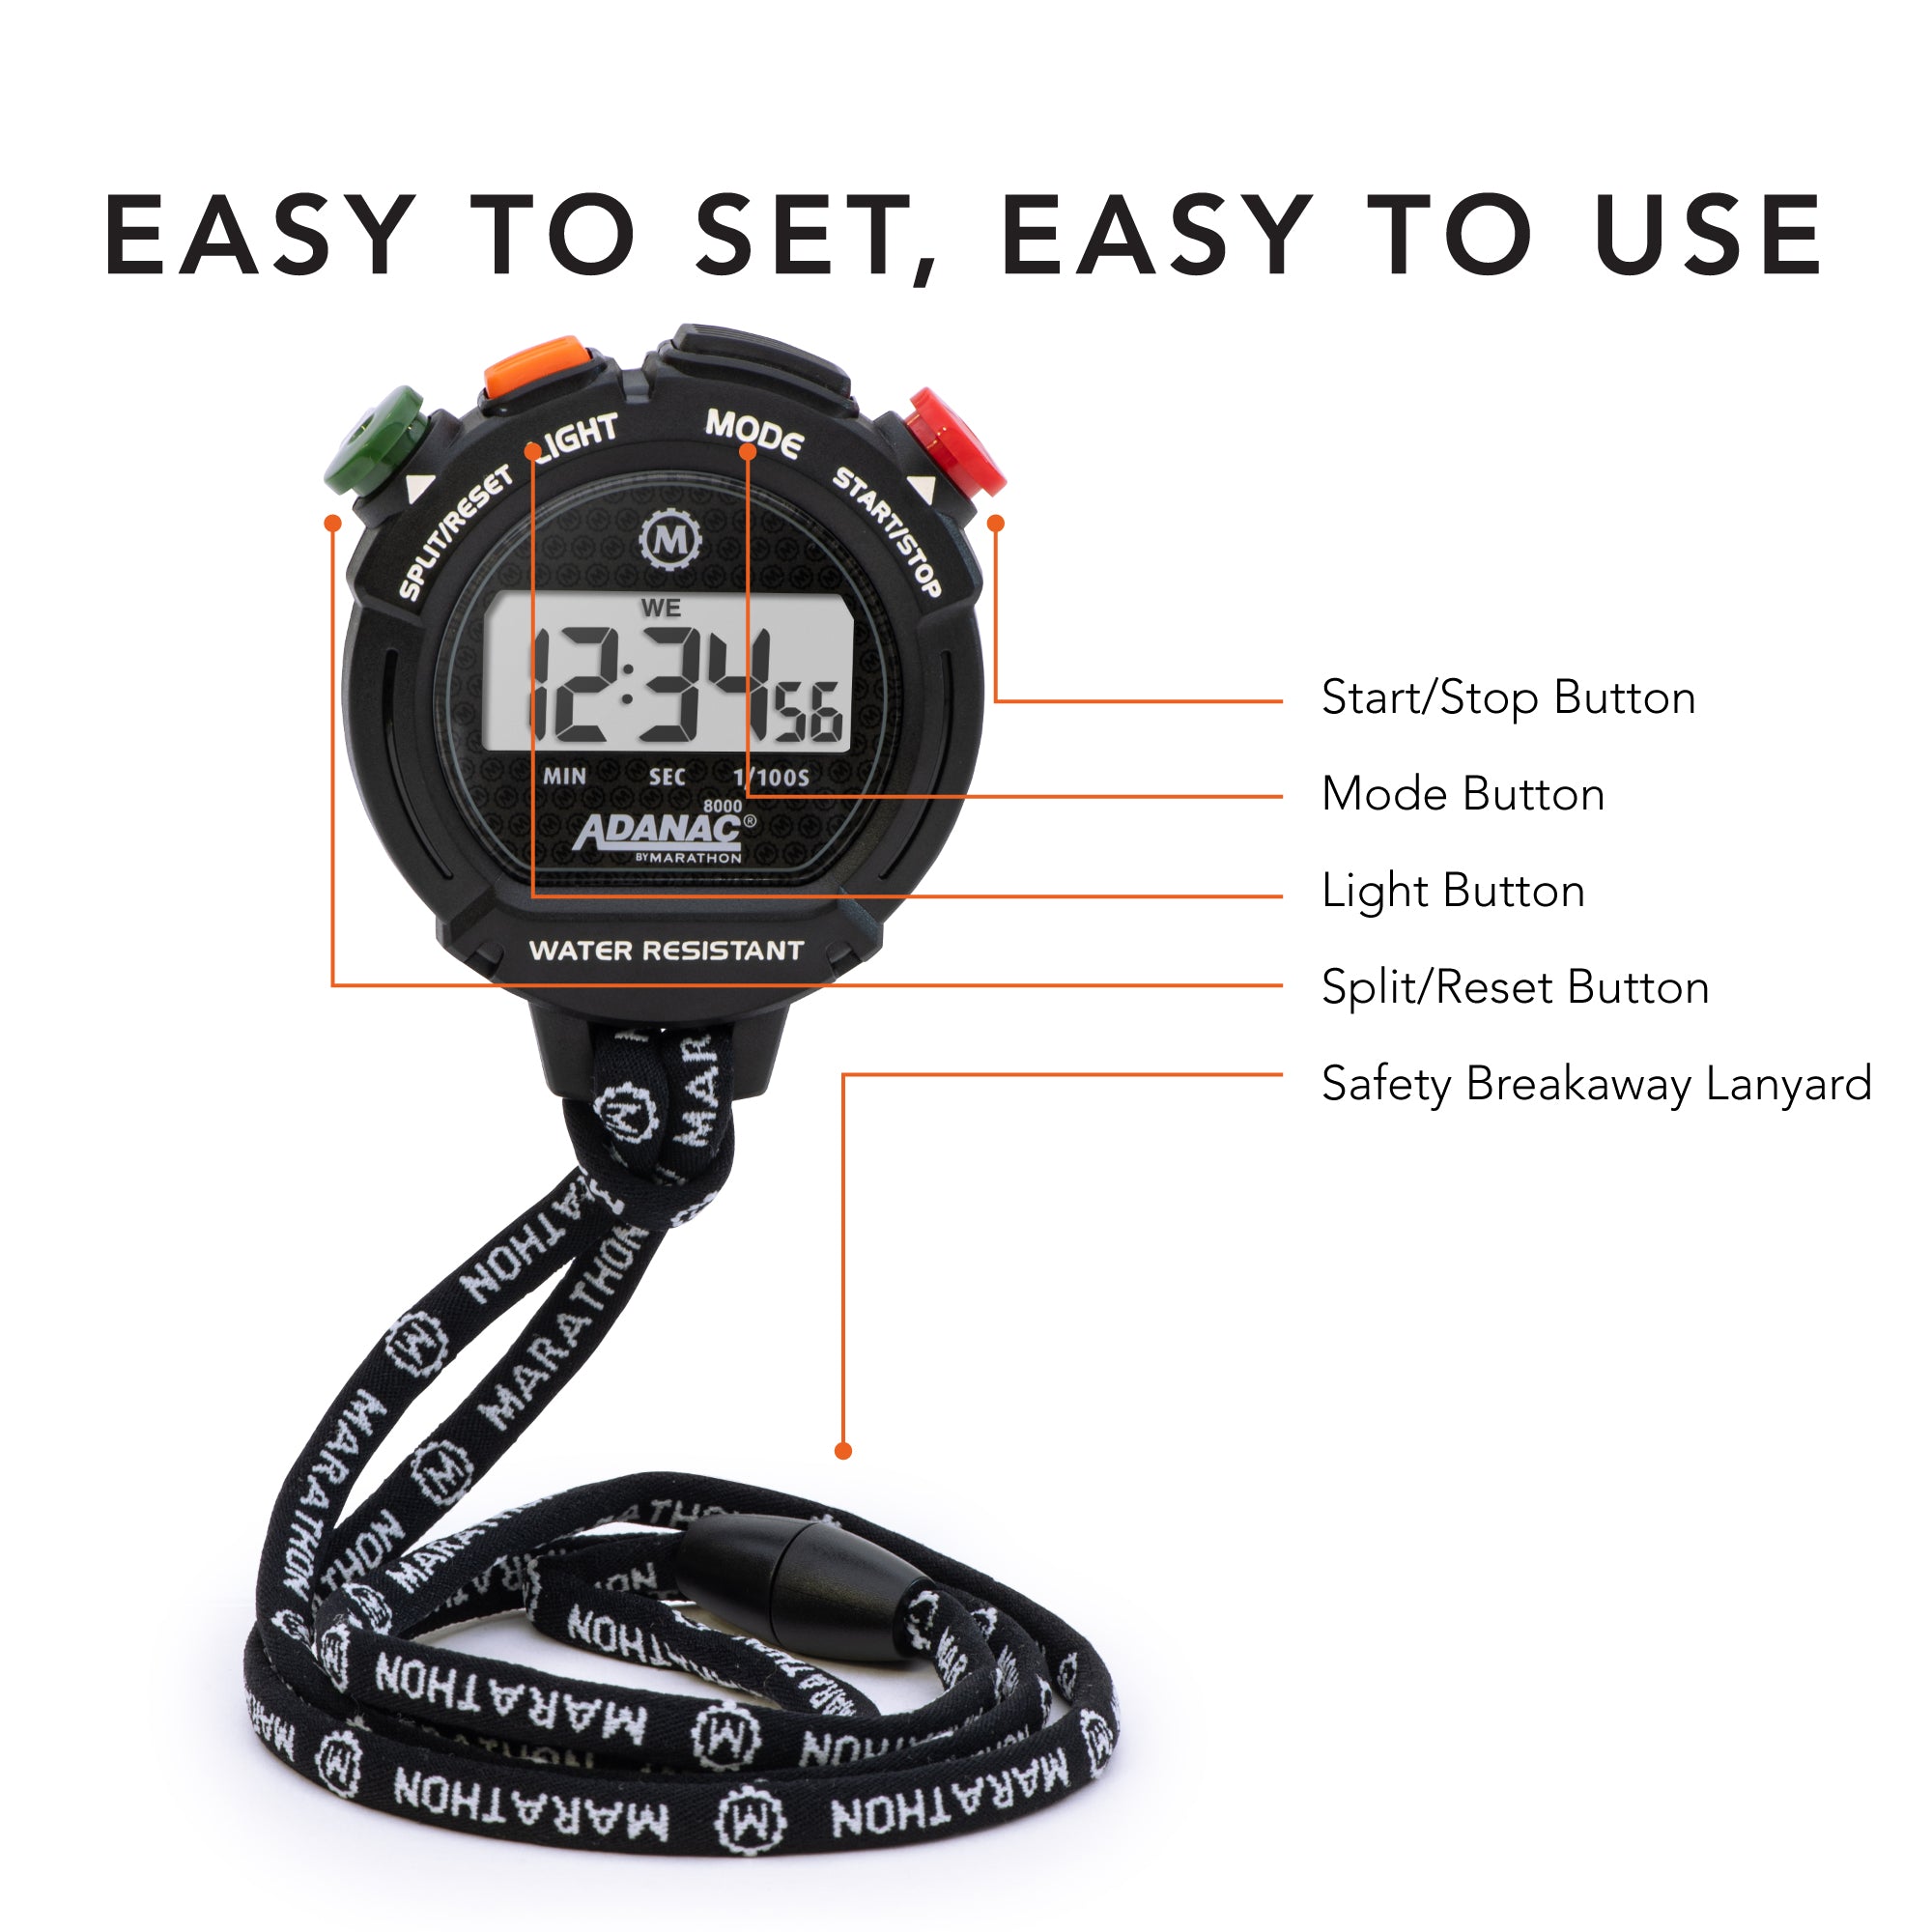 ADANAC 7000 Professional Stopwatch Timer - Marathon Watch Company